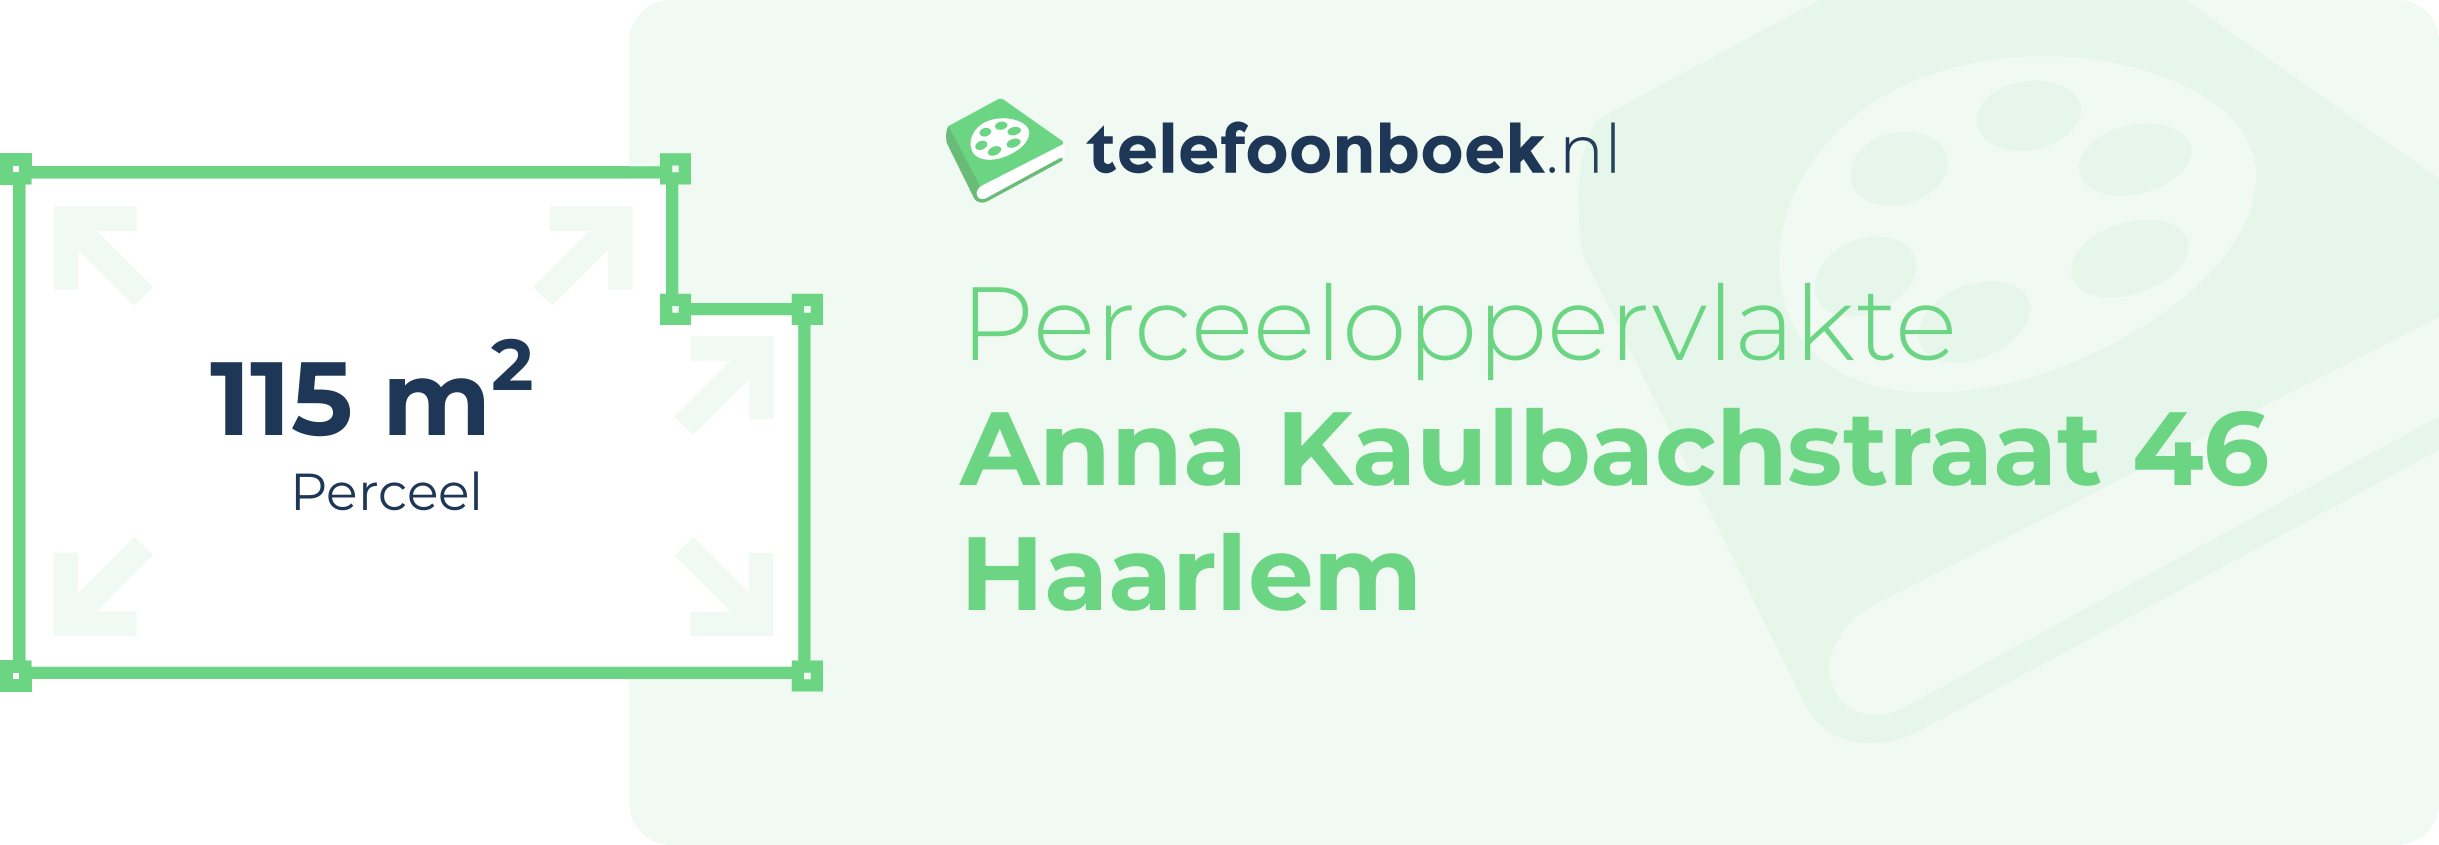 Perceeloppervlakte Anna Kaulbachstraat 46 Haarlem